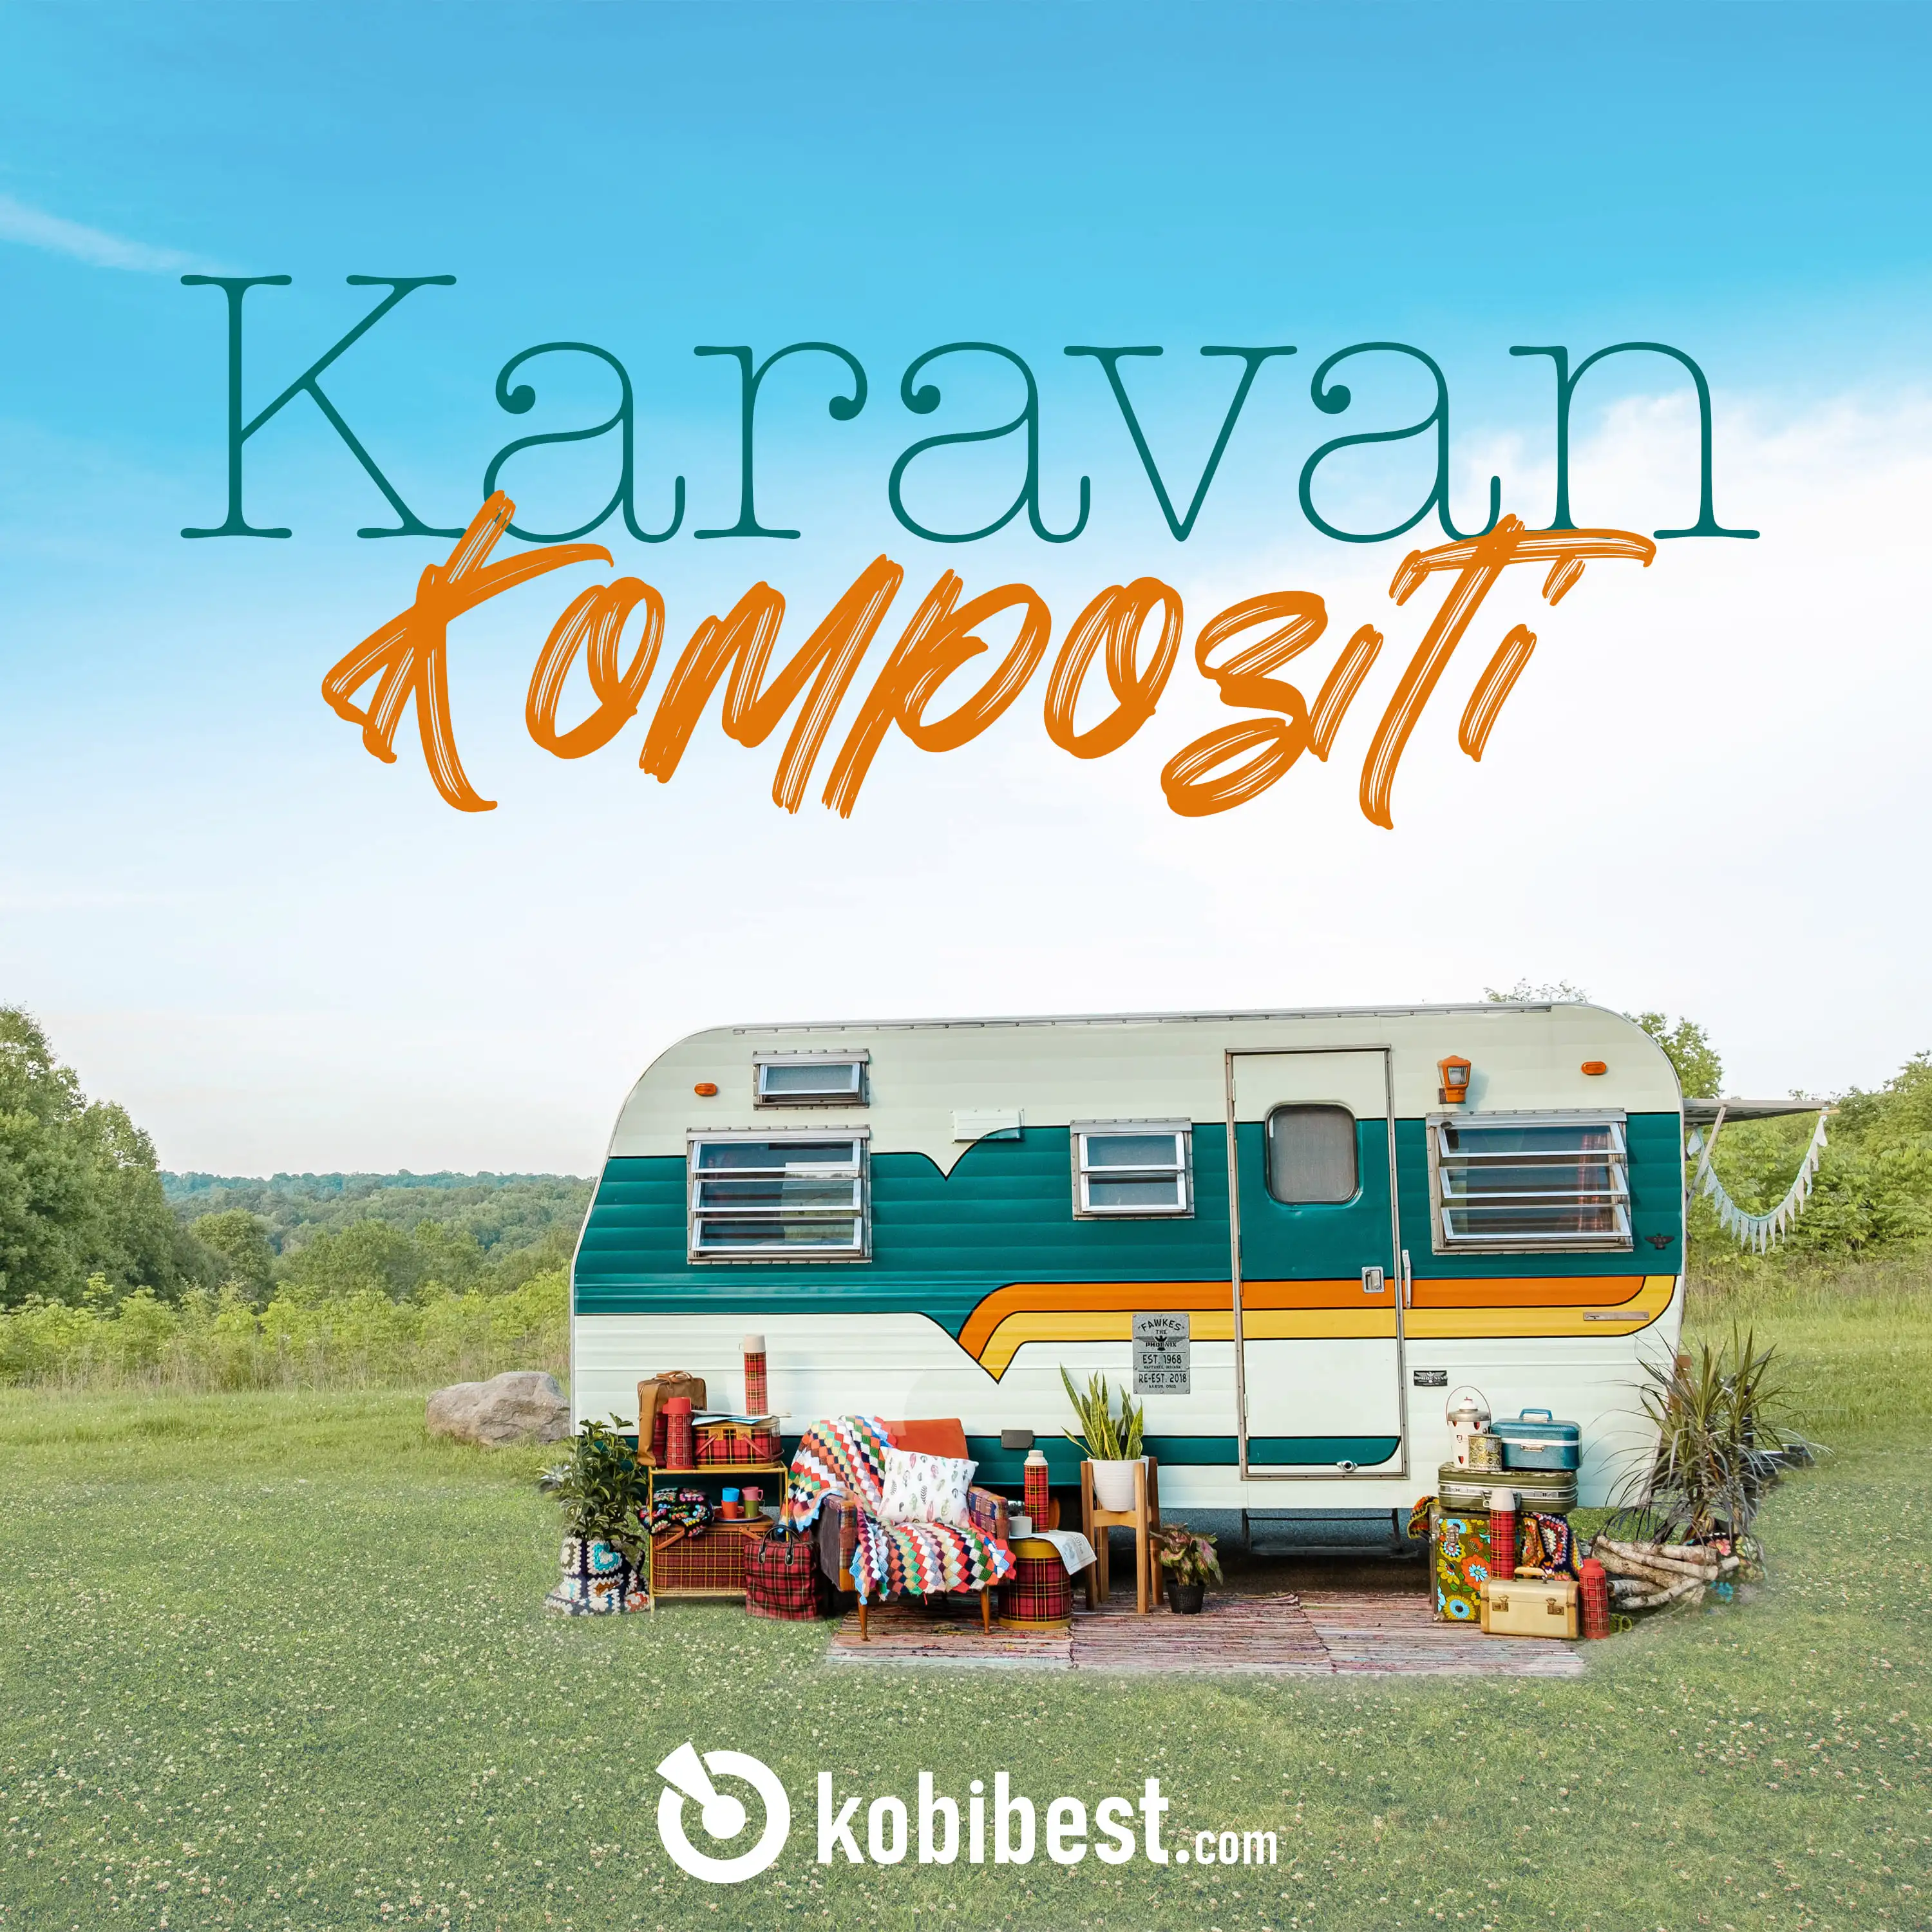 karavan-kompoziti.webp (603 KB)